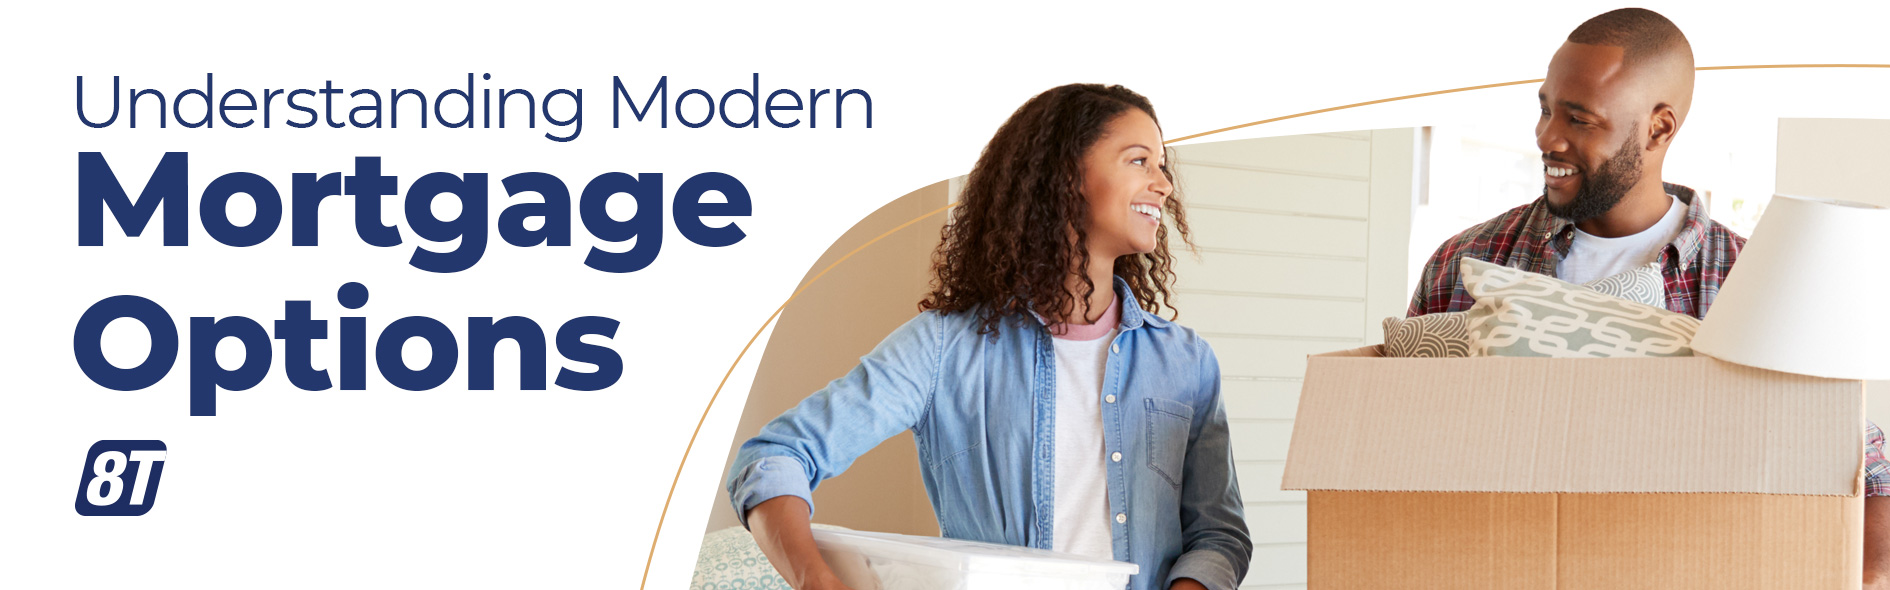 Understanding Modern Mortgage Options Blog Banner